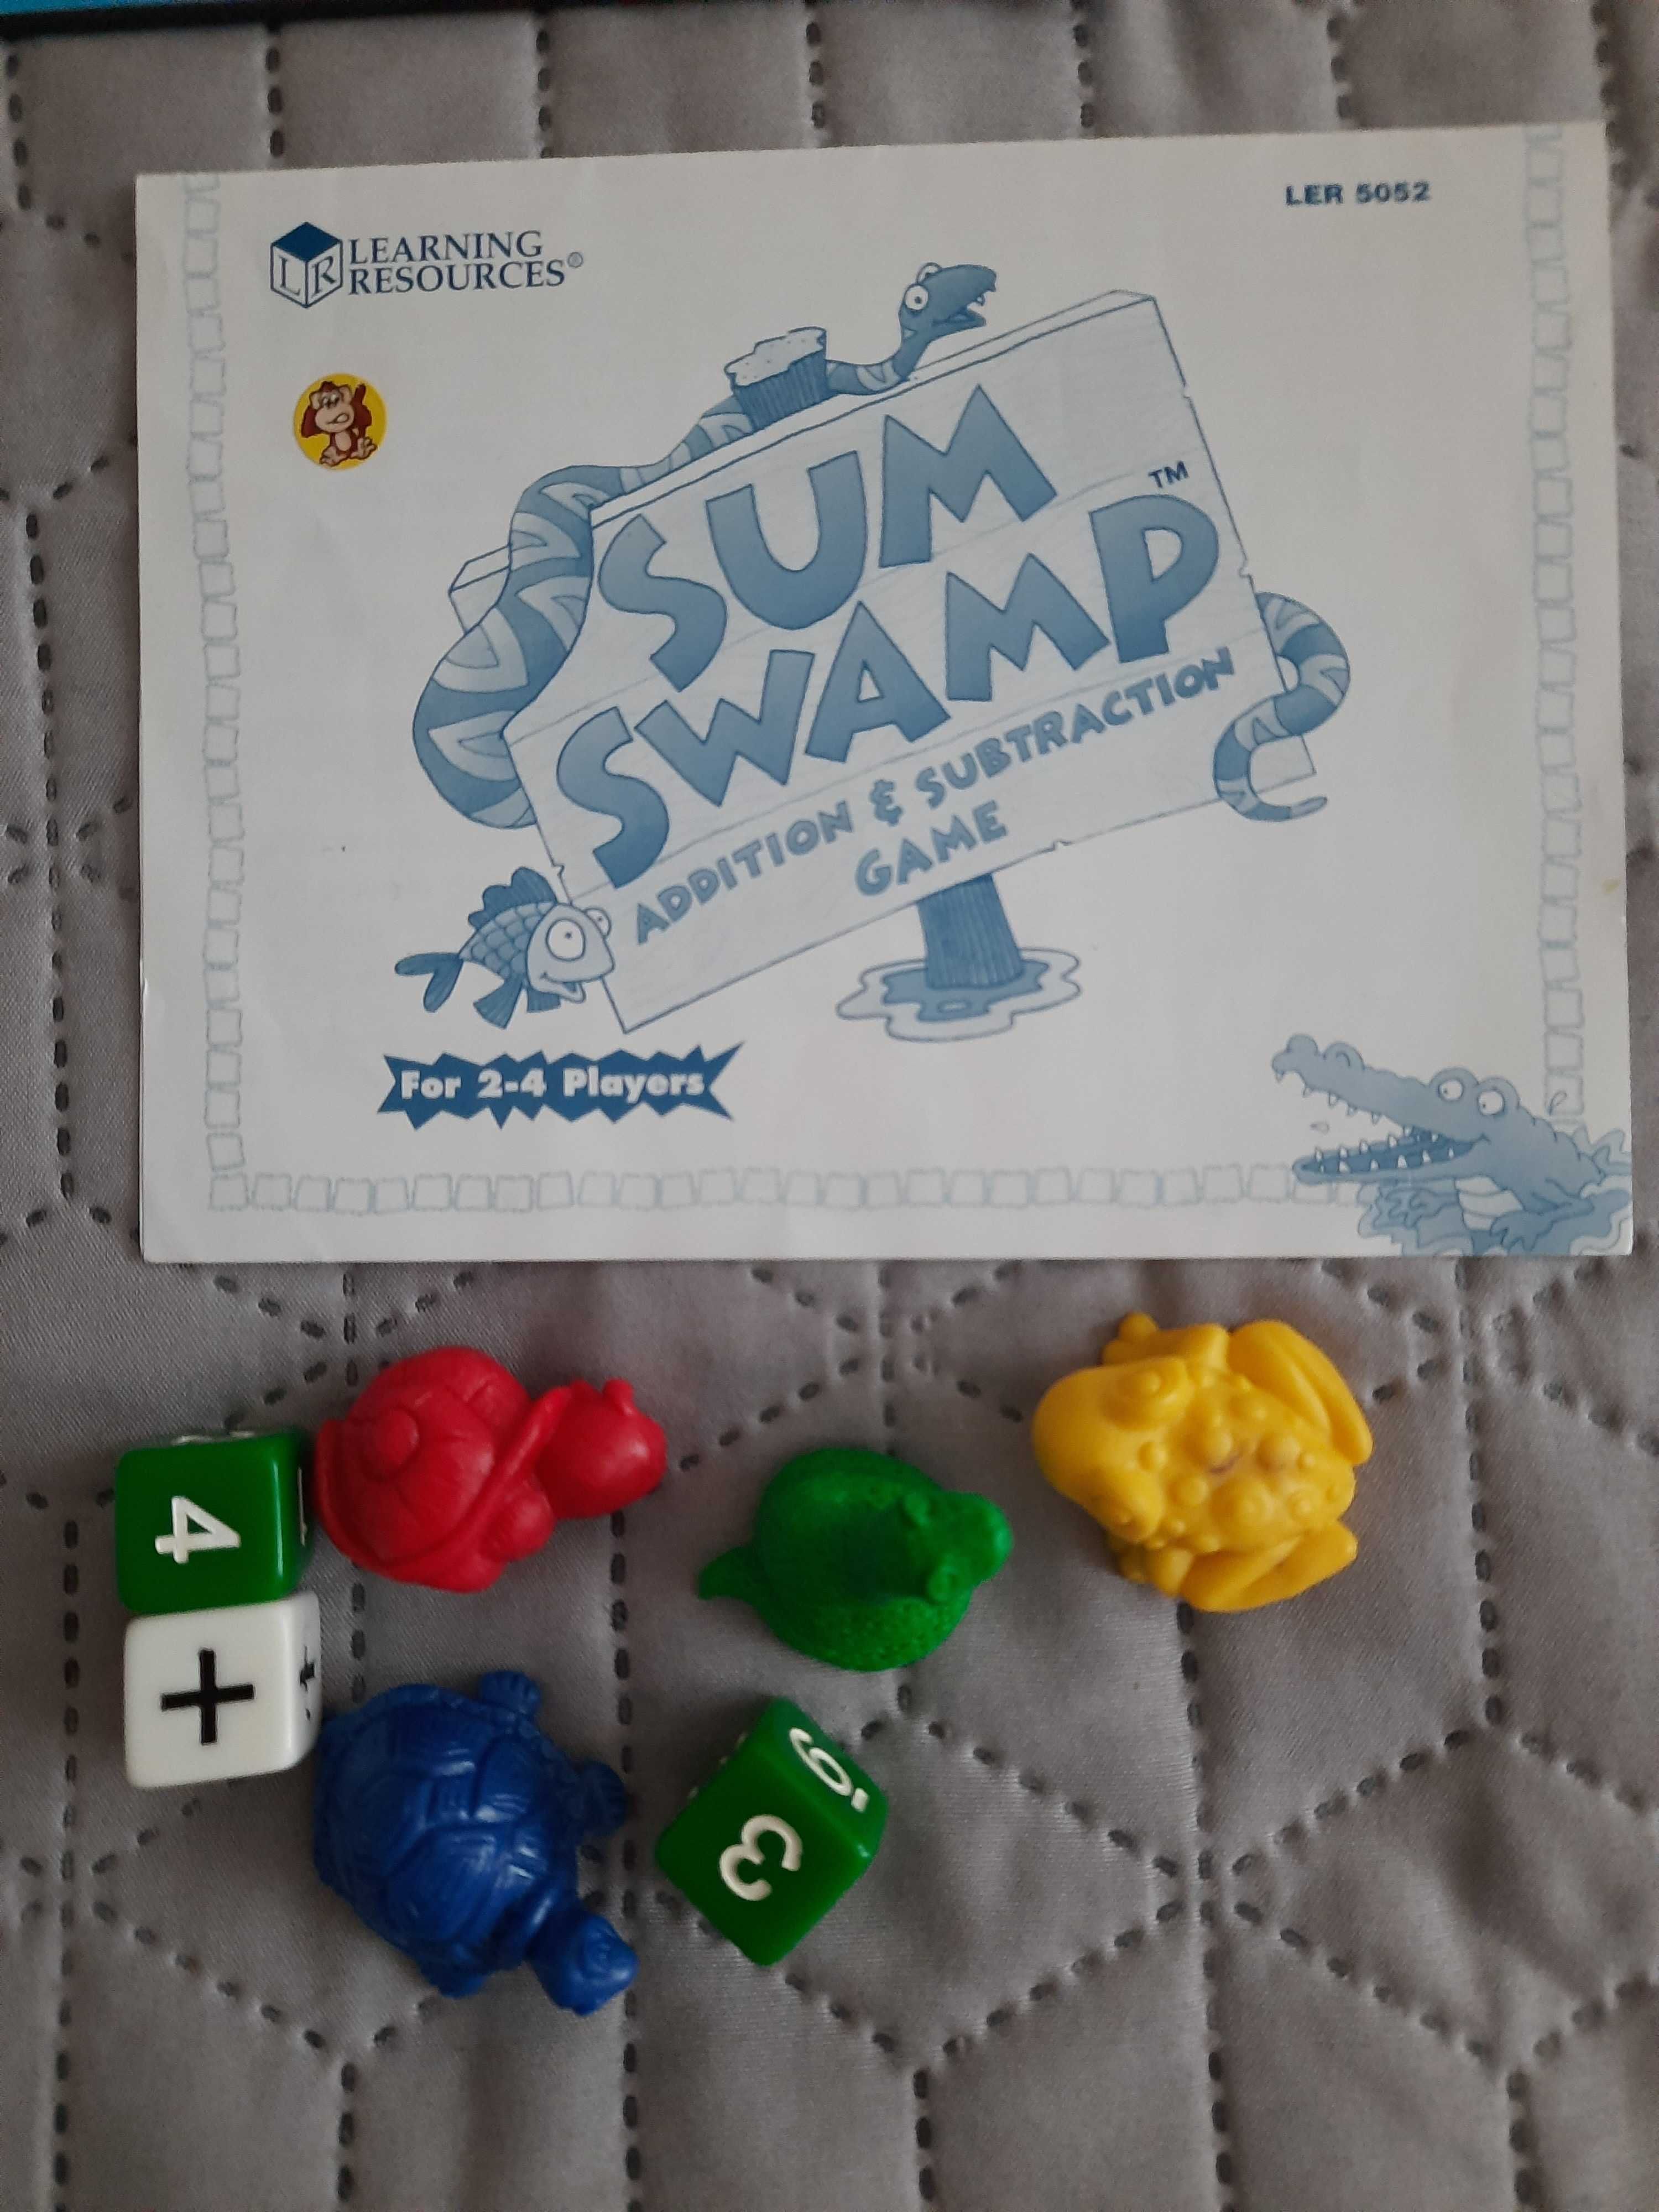 Sum Swamp настільна Математична гра